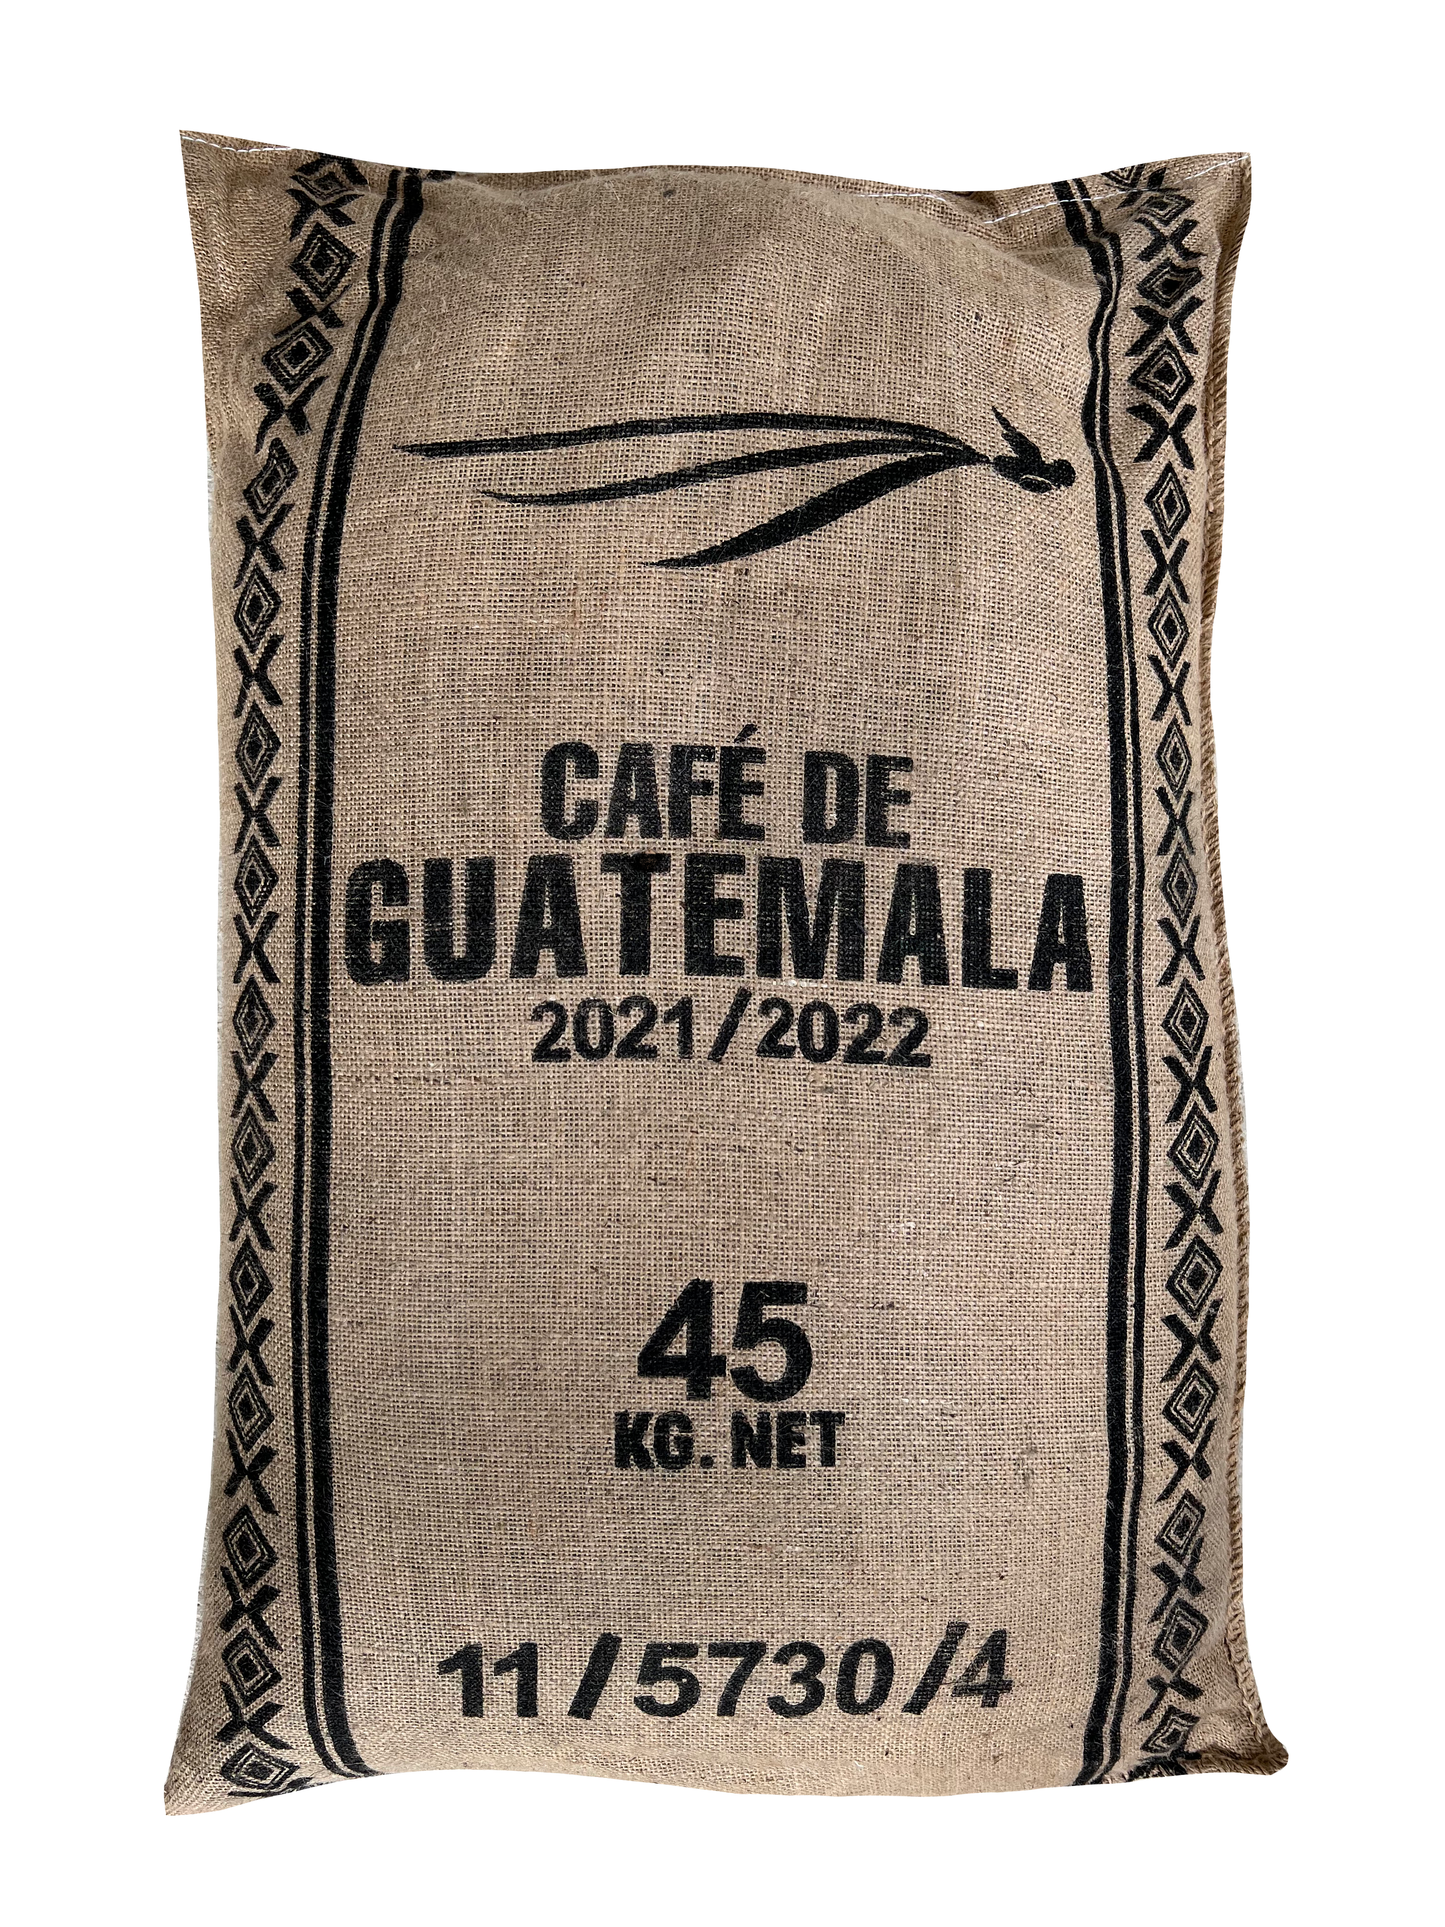 (100 Lbs) Hard Beans Guatemala Specialty Grade Green coffee ($4.75 per lb)